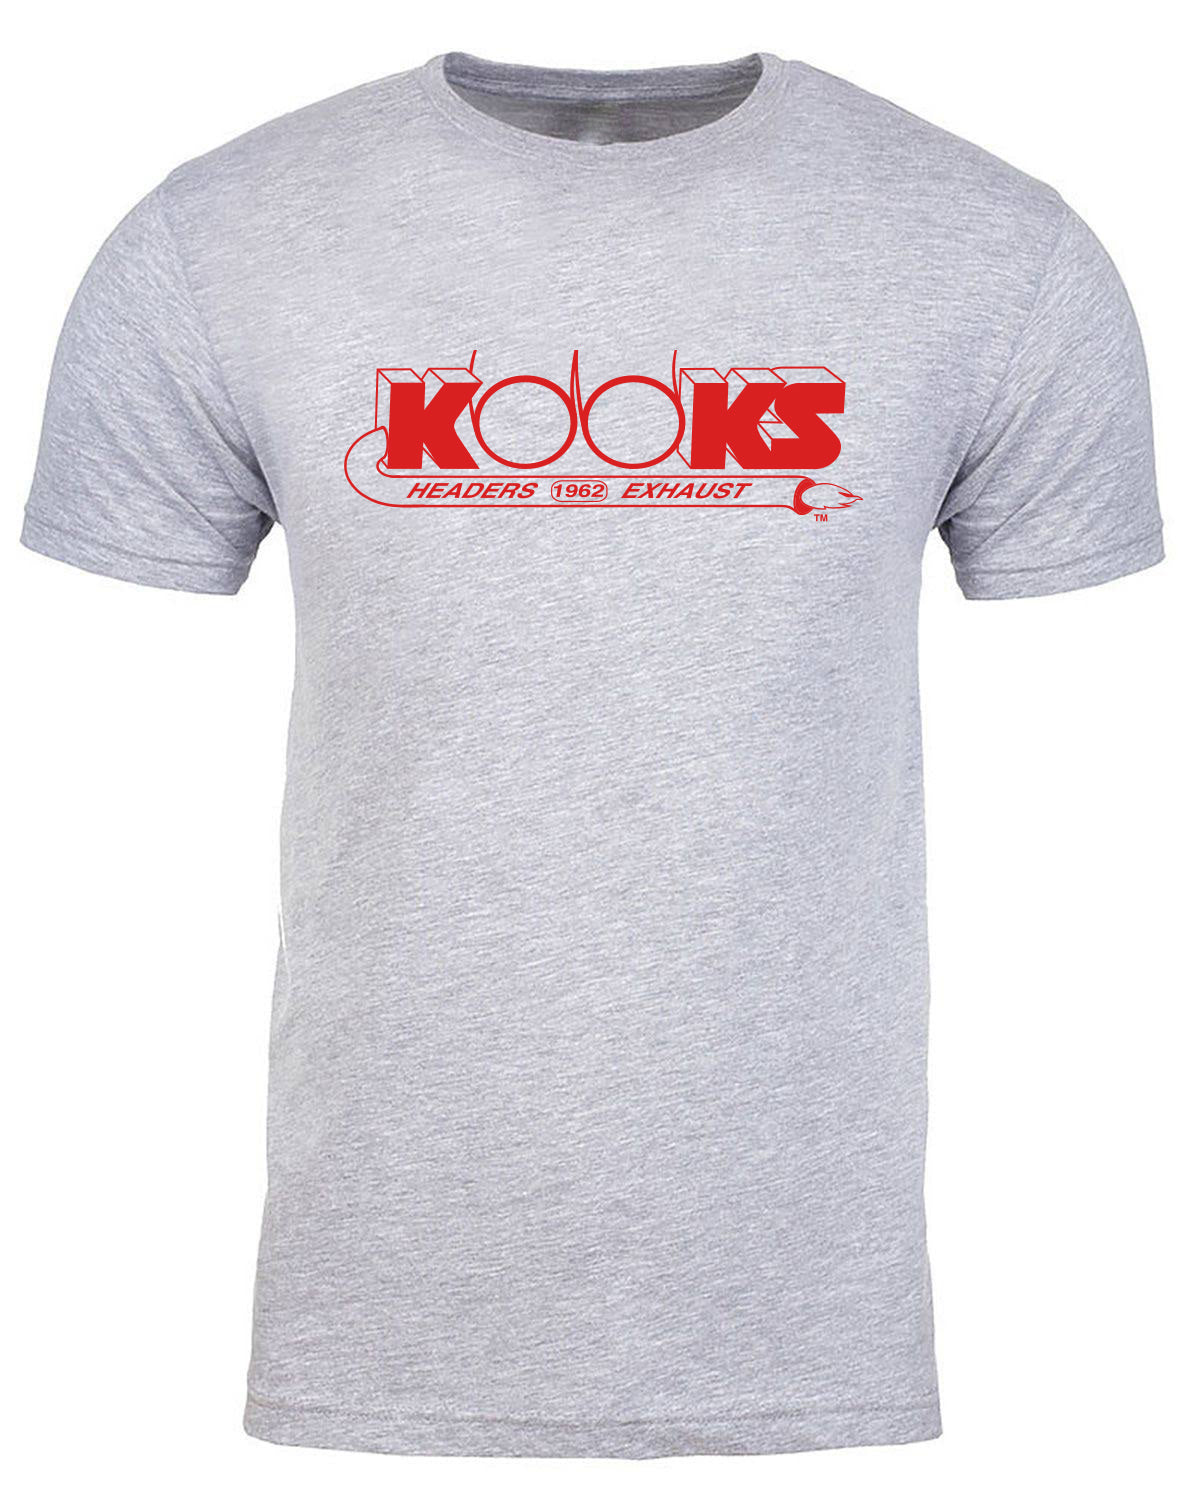 Kooks Custom Headers T-Shirt TS-100648-06